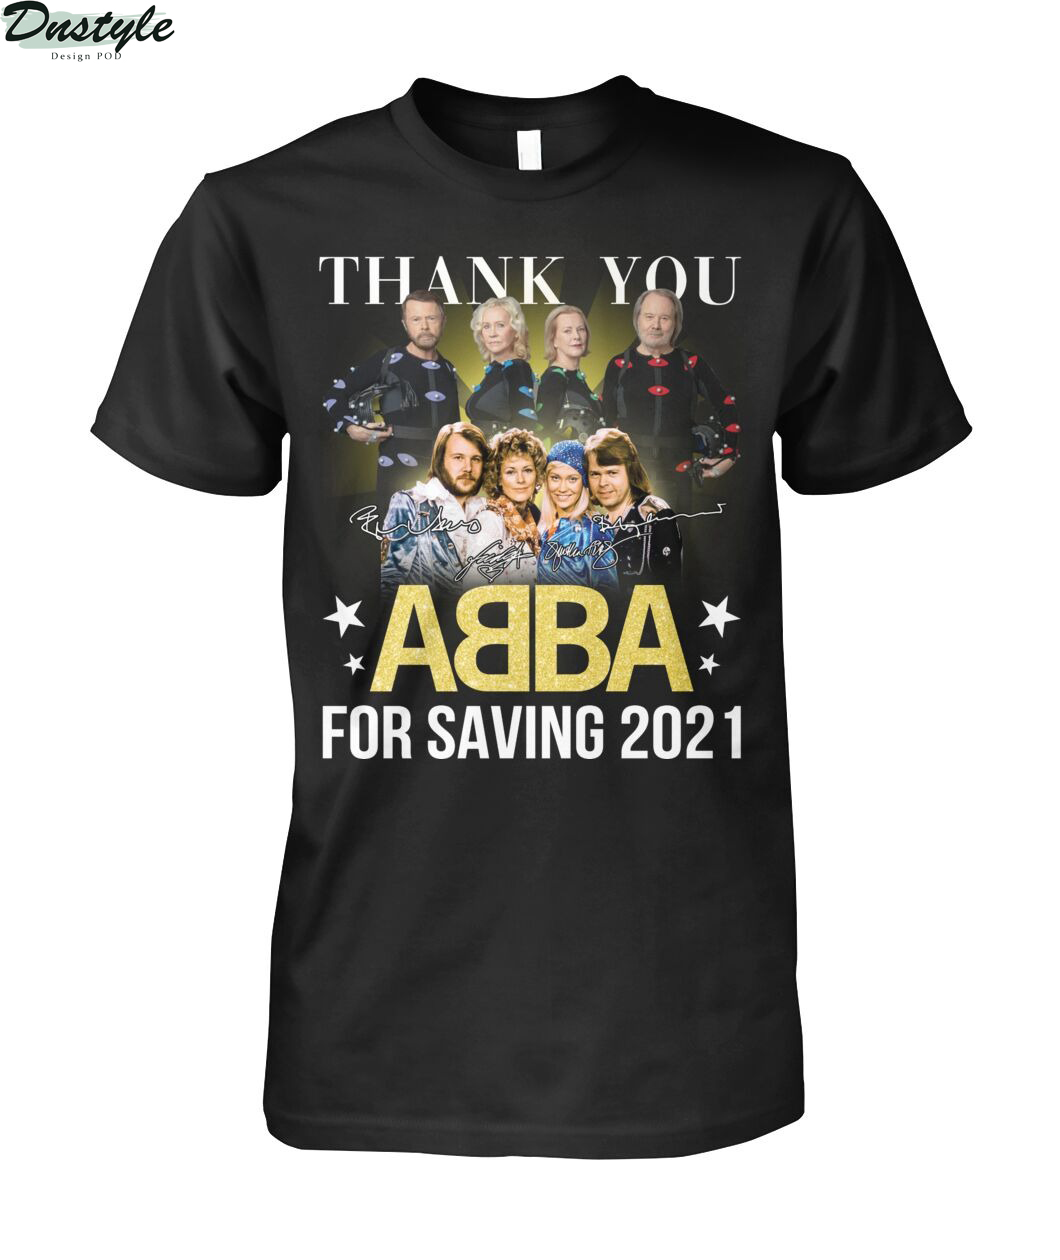 Thank you ABBA for saving 2021 shirt